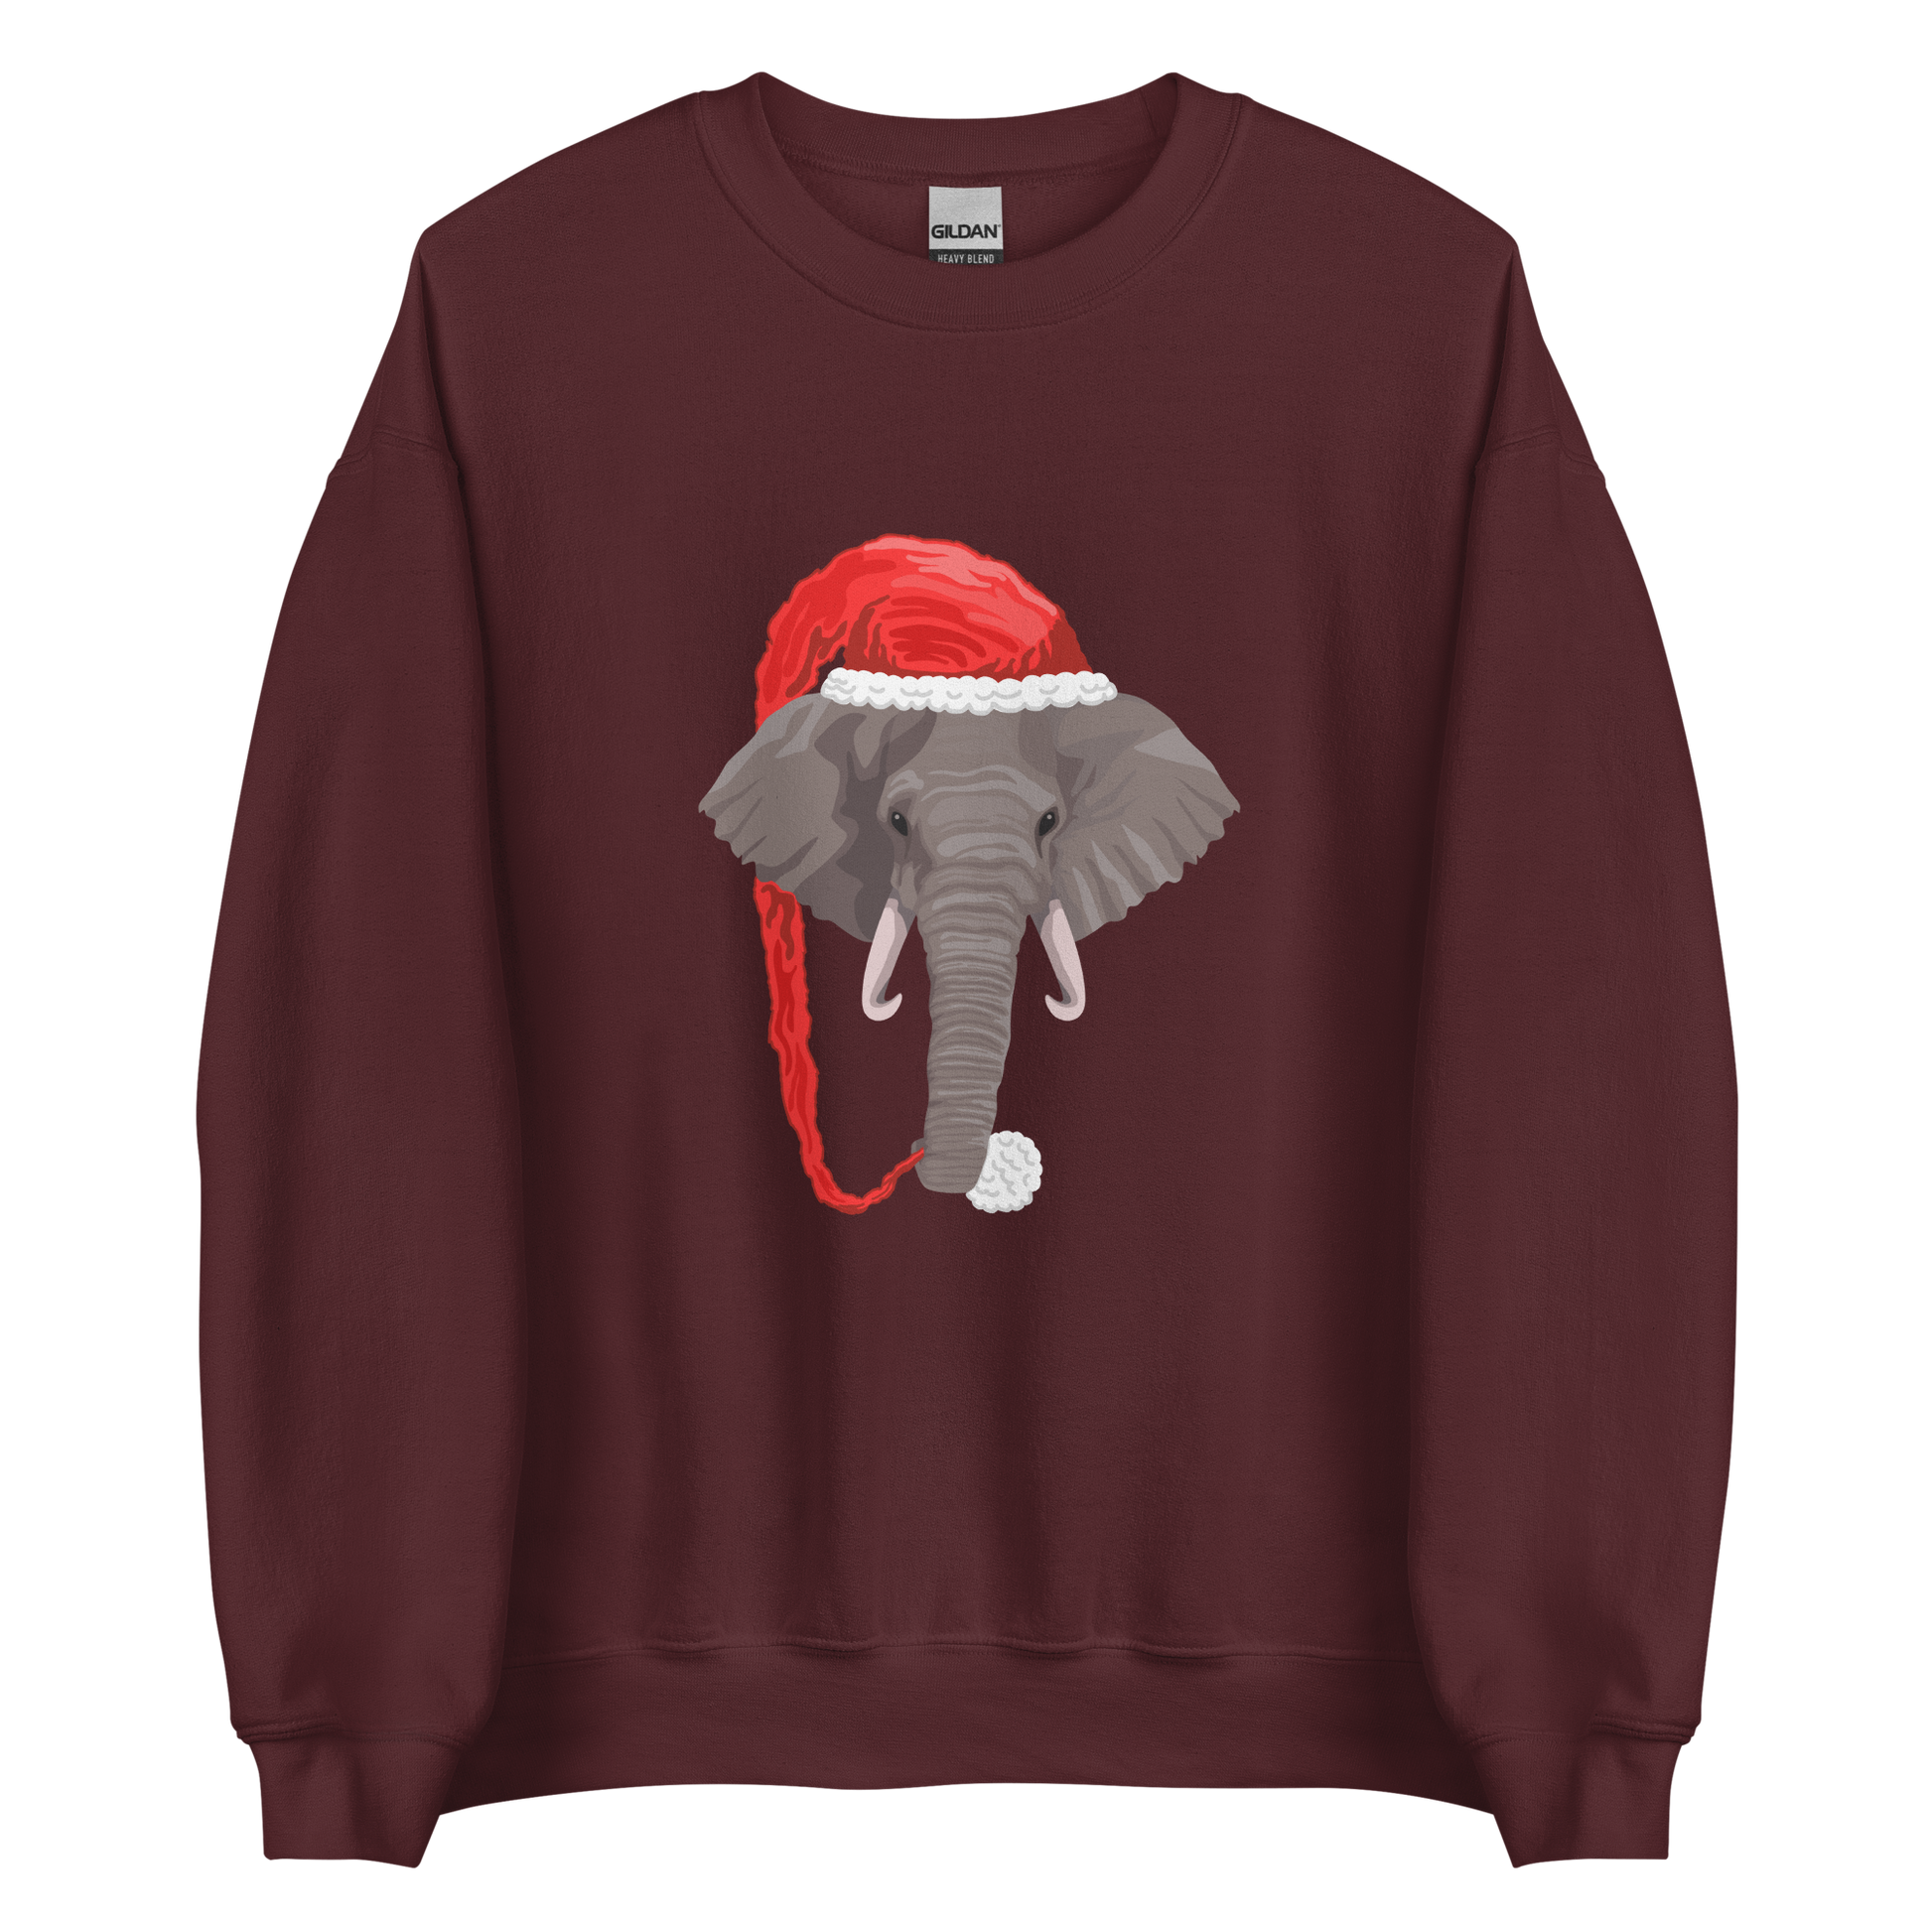 Maroon Christmas Elephant Sweatshirt featuring a delight Elephant Wearing an Elf Hat graphic on the chest - Funny Christmas Graphic Elephant Sweatshirts - Boozy Fox